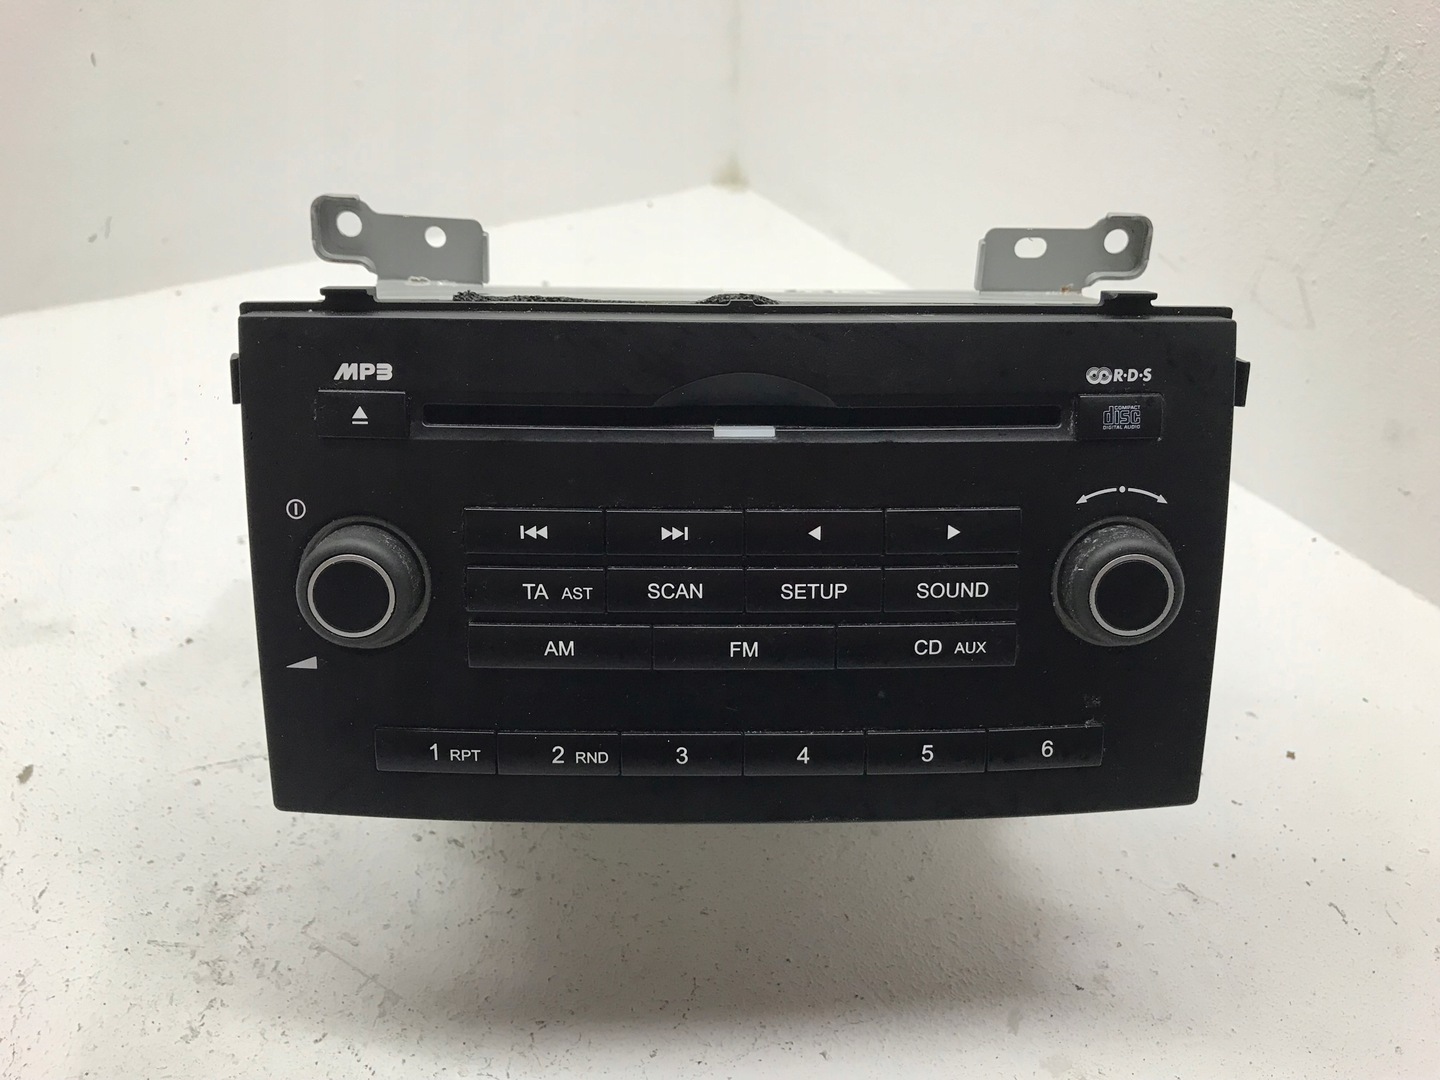 Fiat bravo 2 radio cd mp3 factory radio - Online car parts ❱ XDALYS